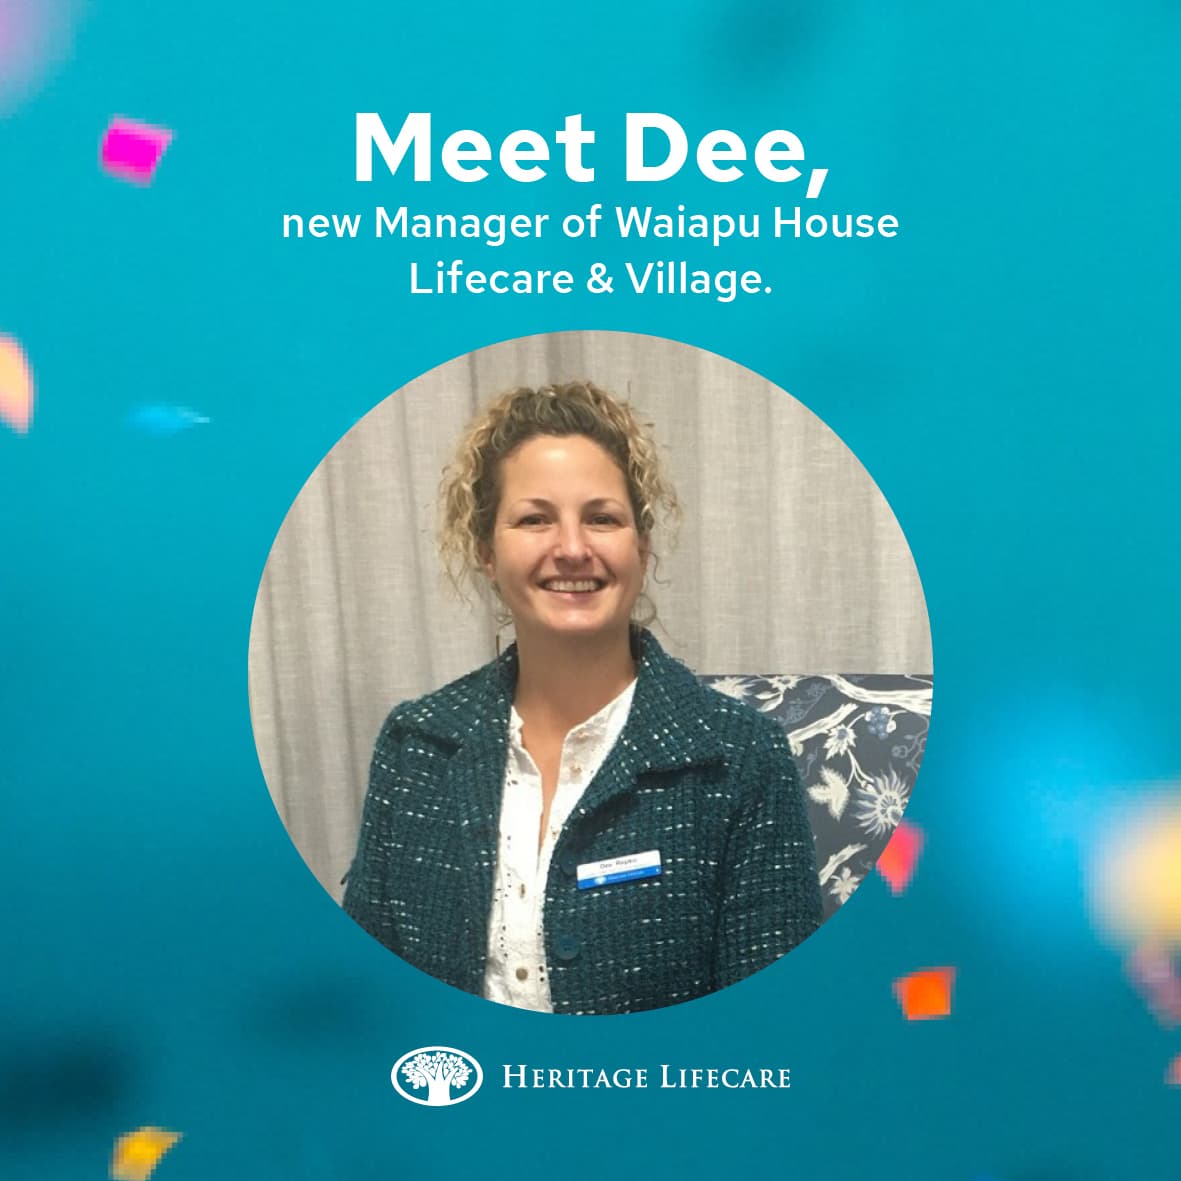 Dee Repko, manager of Waiapu House Lifecare & Village.